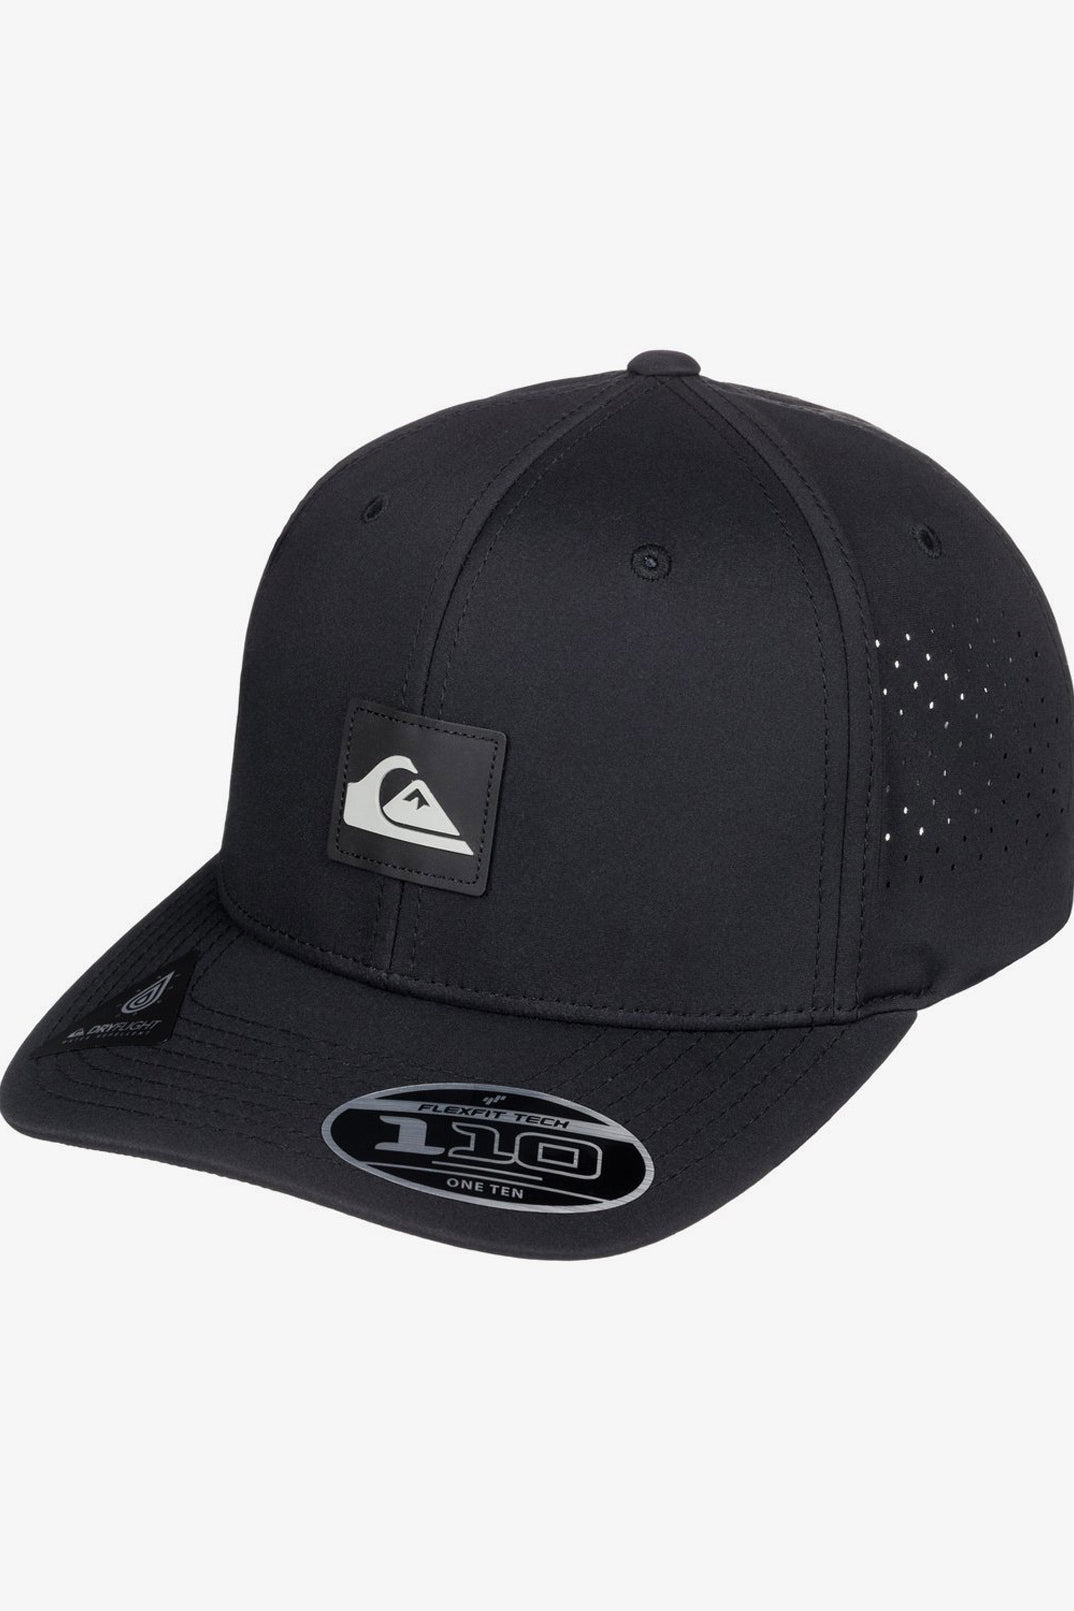 Quiksilver: Adapted Flexfit Hat